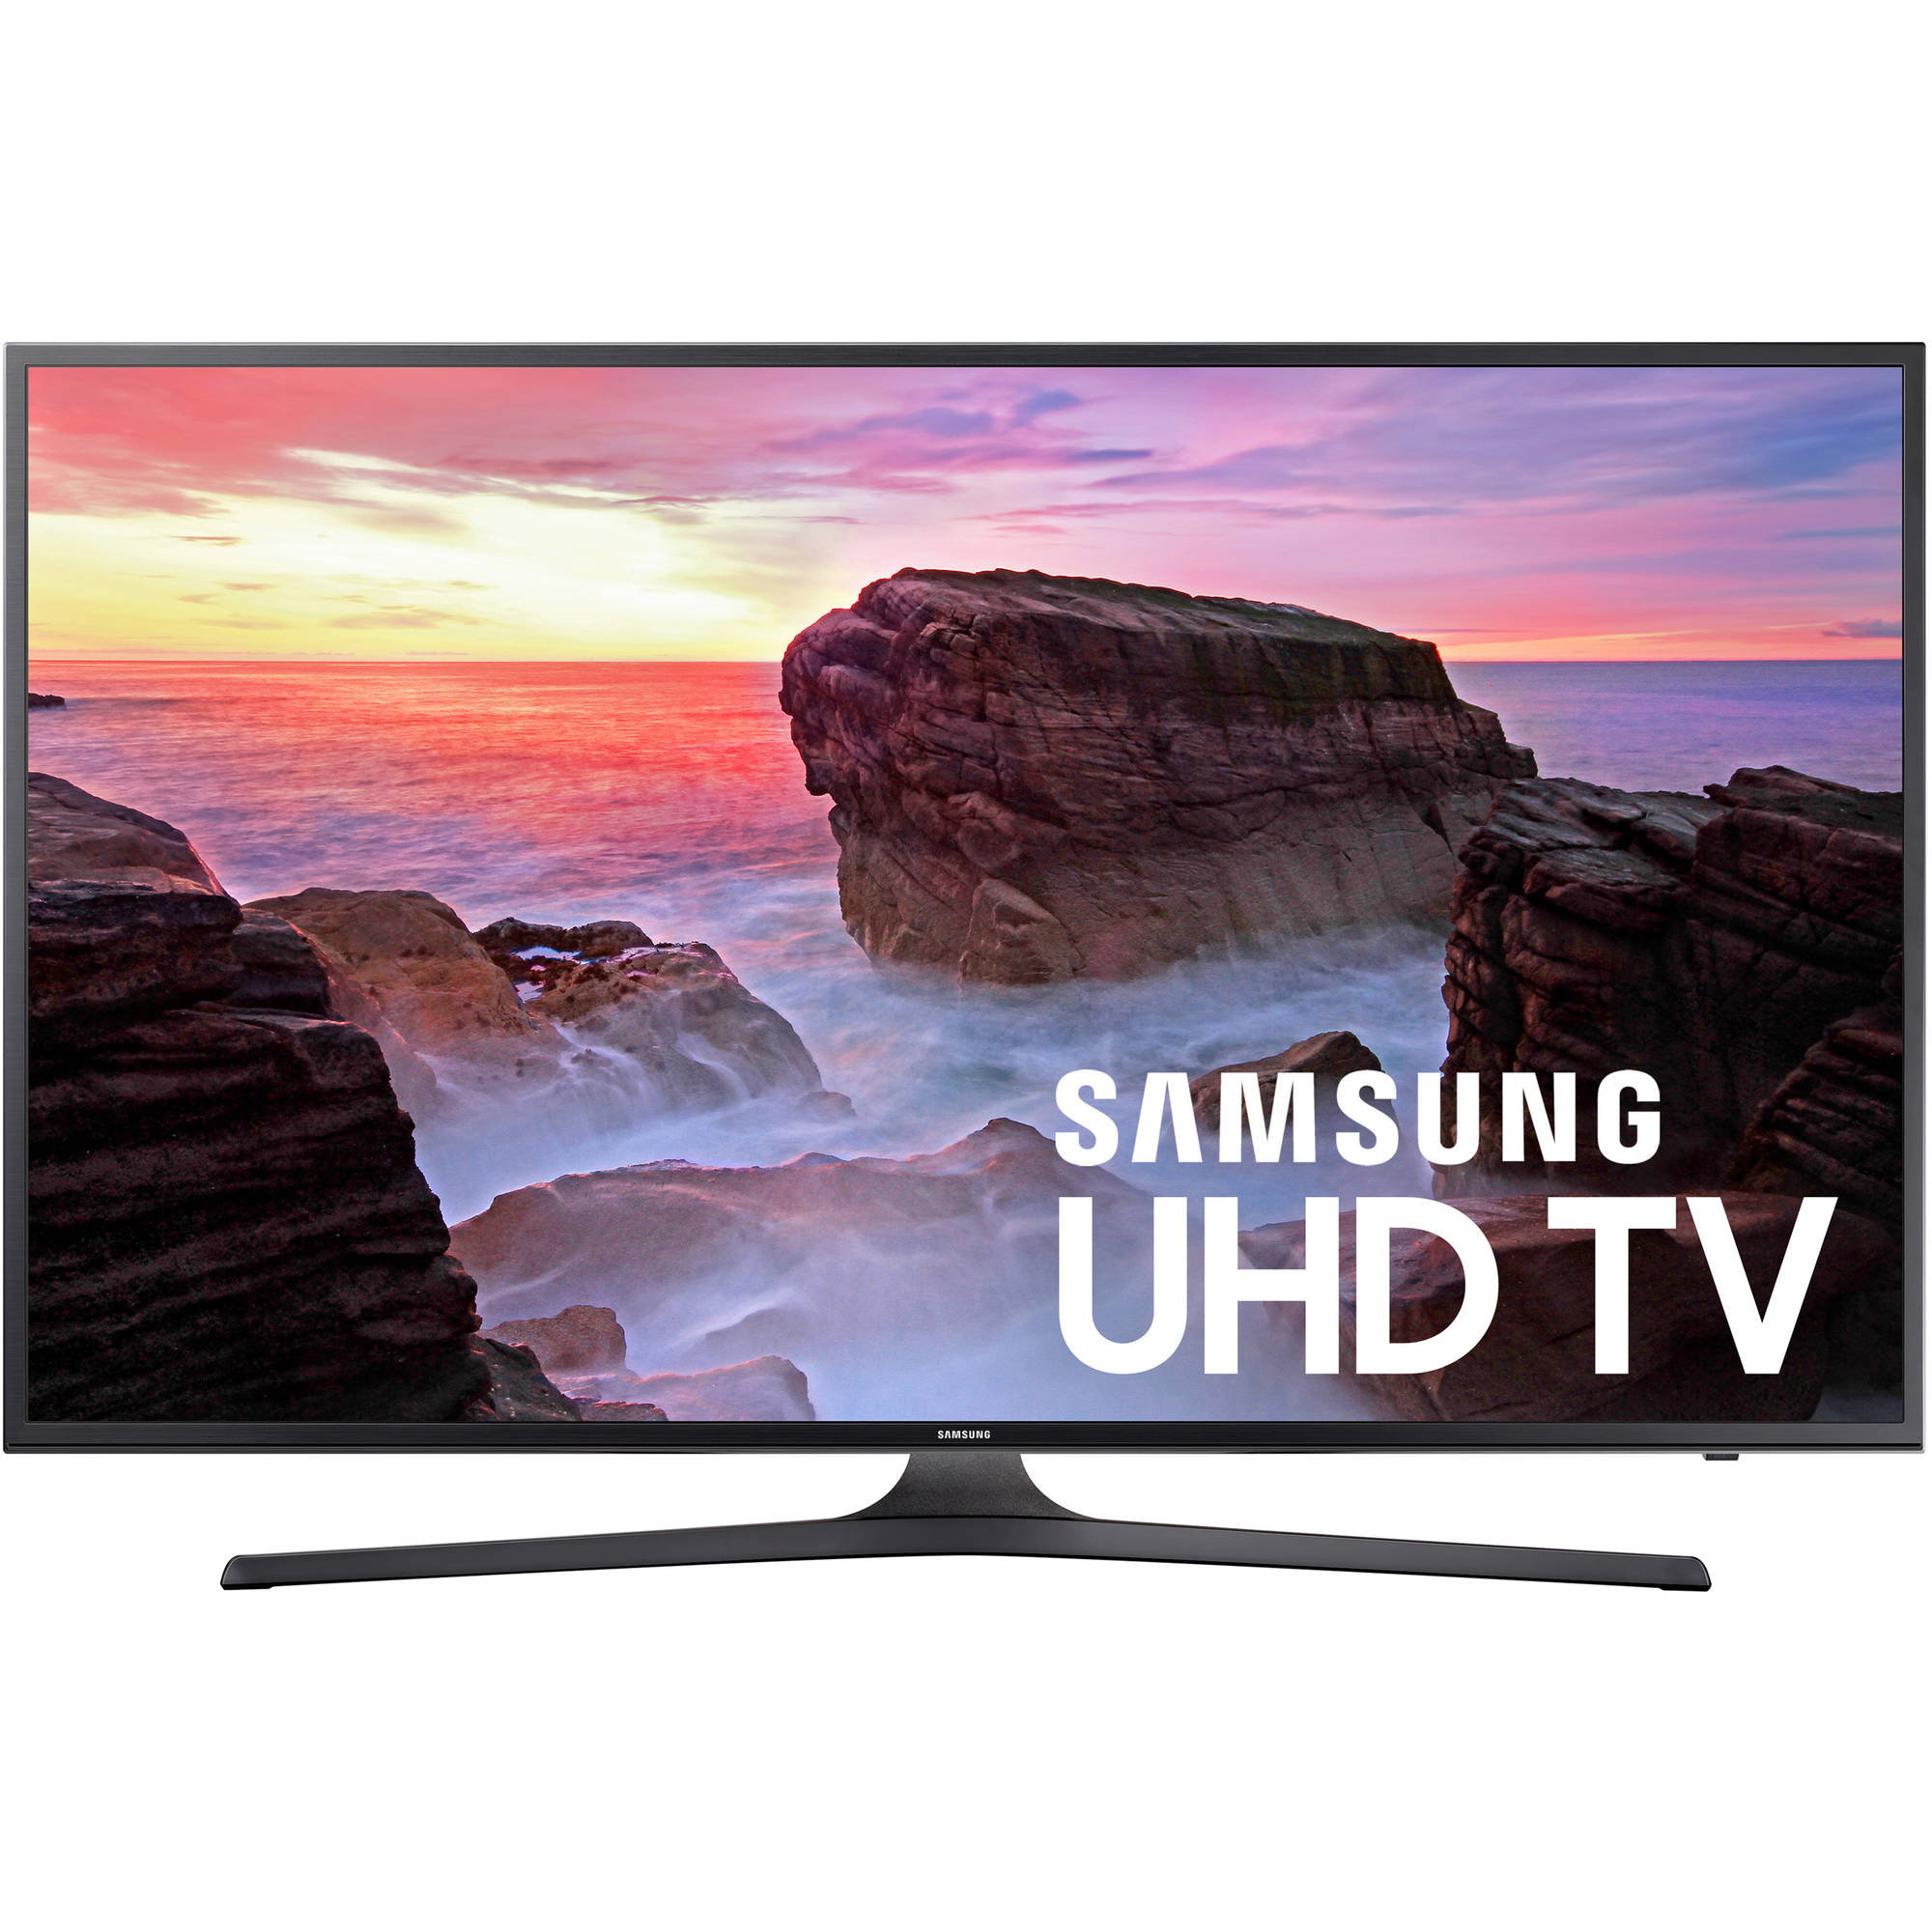 SAMSUNG 55" Class 4K (2160P) Ultra HD Smart LED TV (UN55MU6300FXZA) - image 1 of 12